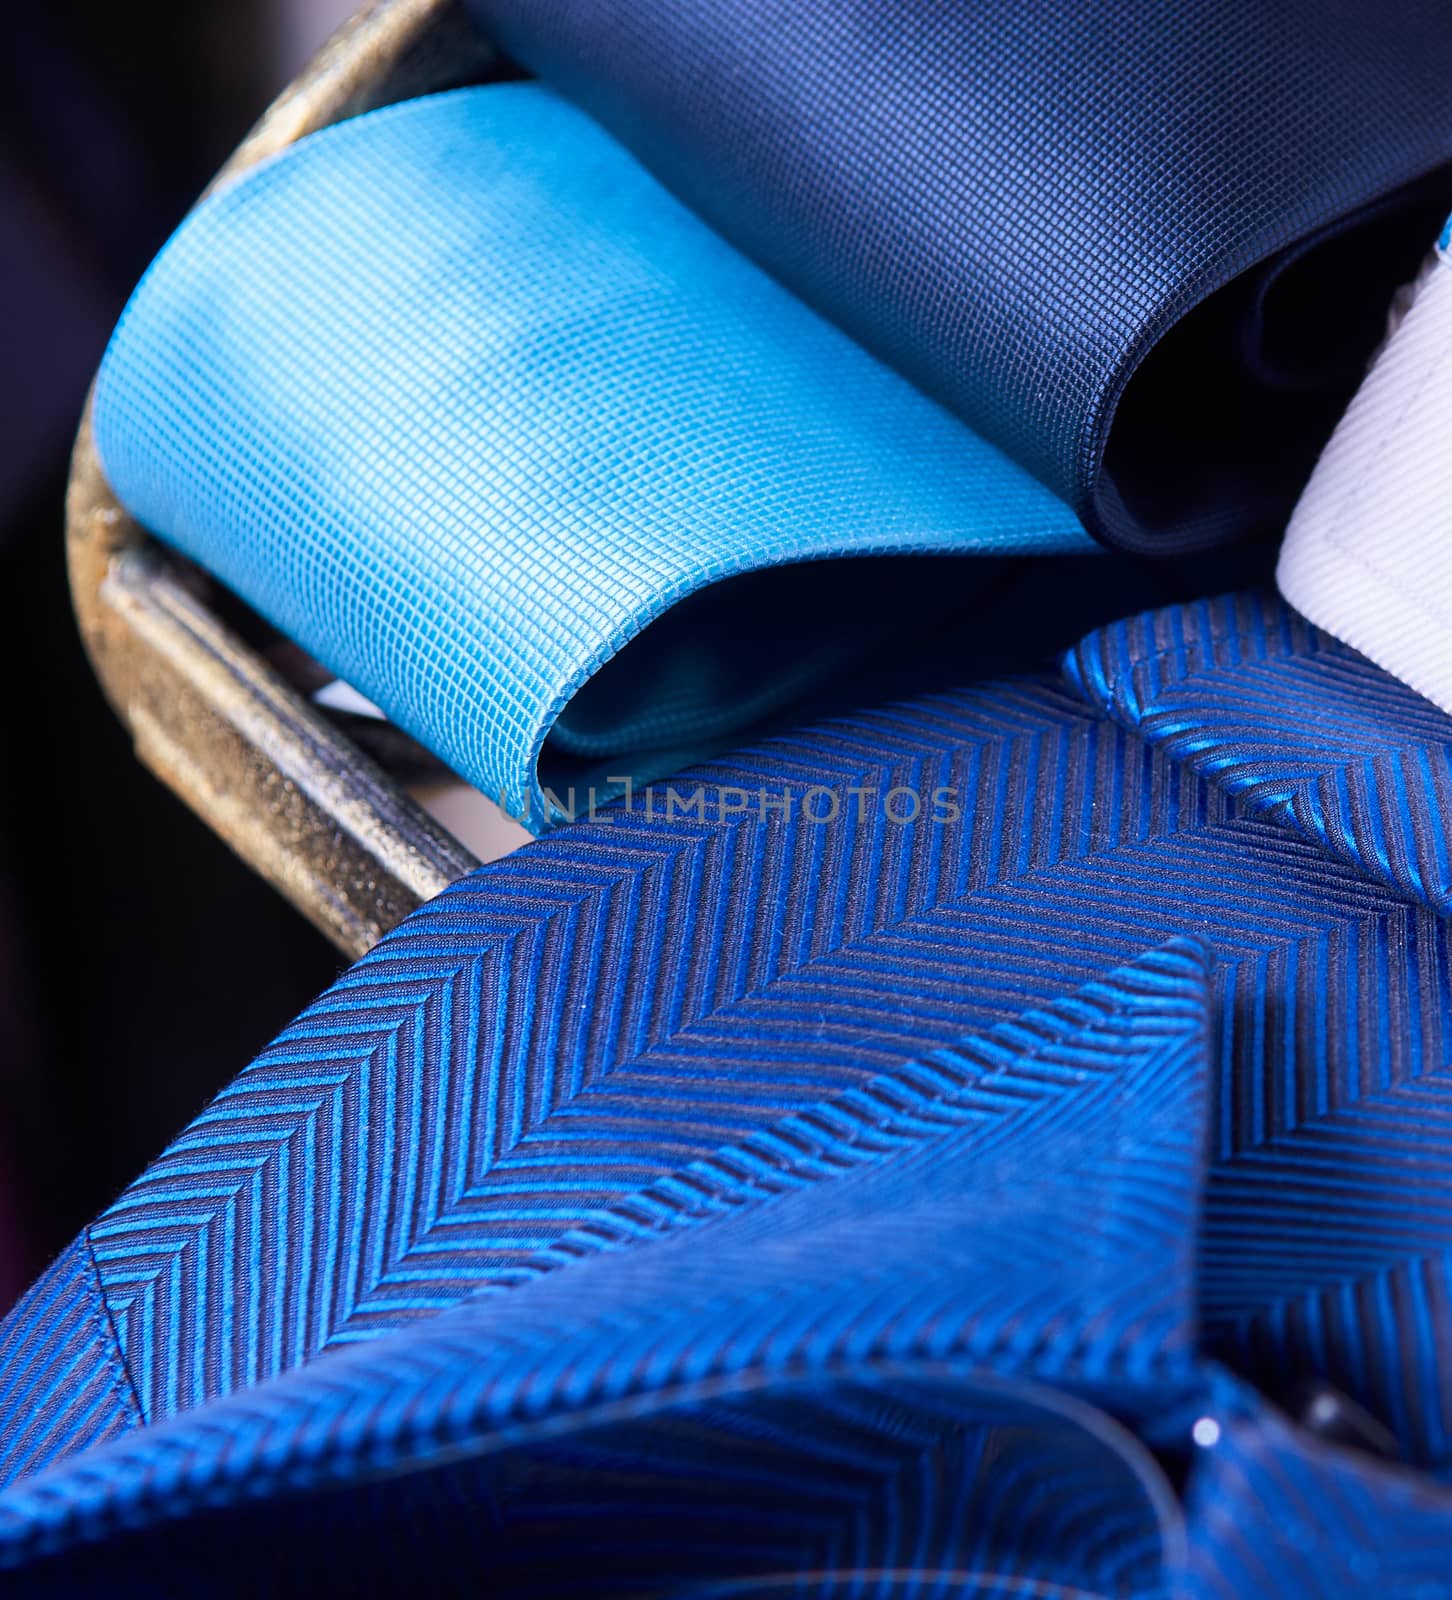 Suit Texture Close Up by sarymsakov